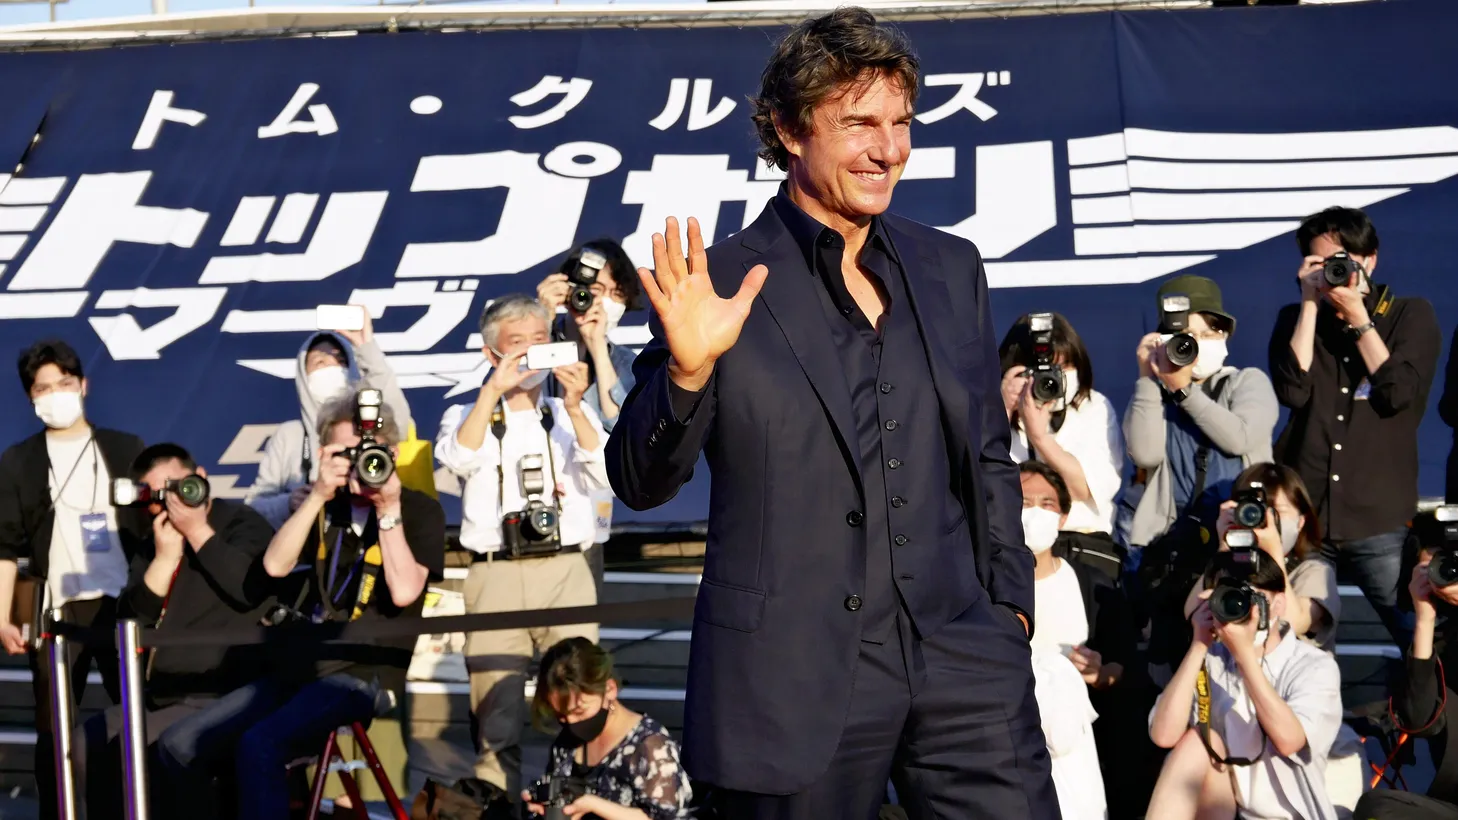 Actor Tom Cruise waves to fans at the Japan premiere of “Top Gun: Maverick” at Osanbashi Yokohama International Passenger Terminal in Kanagawa Prefecture on May 24, 2022.